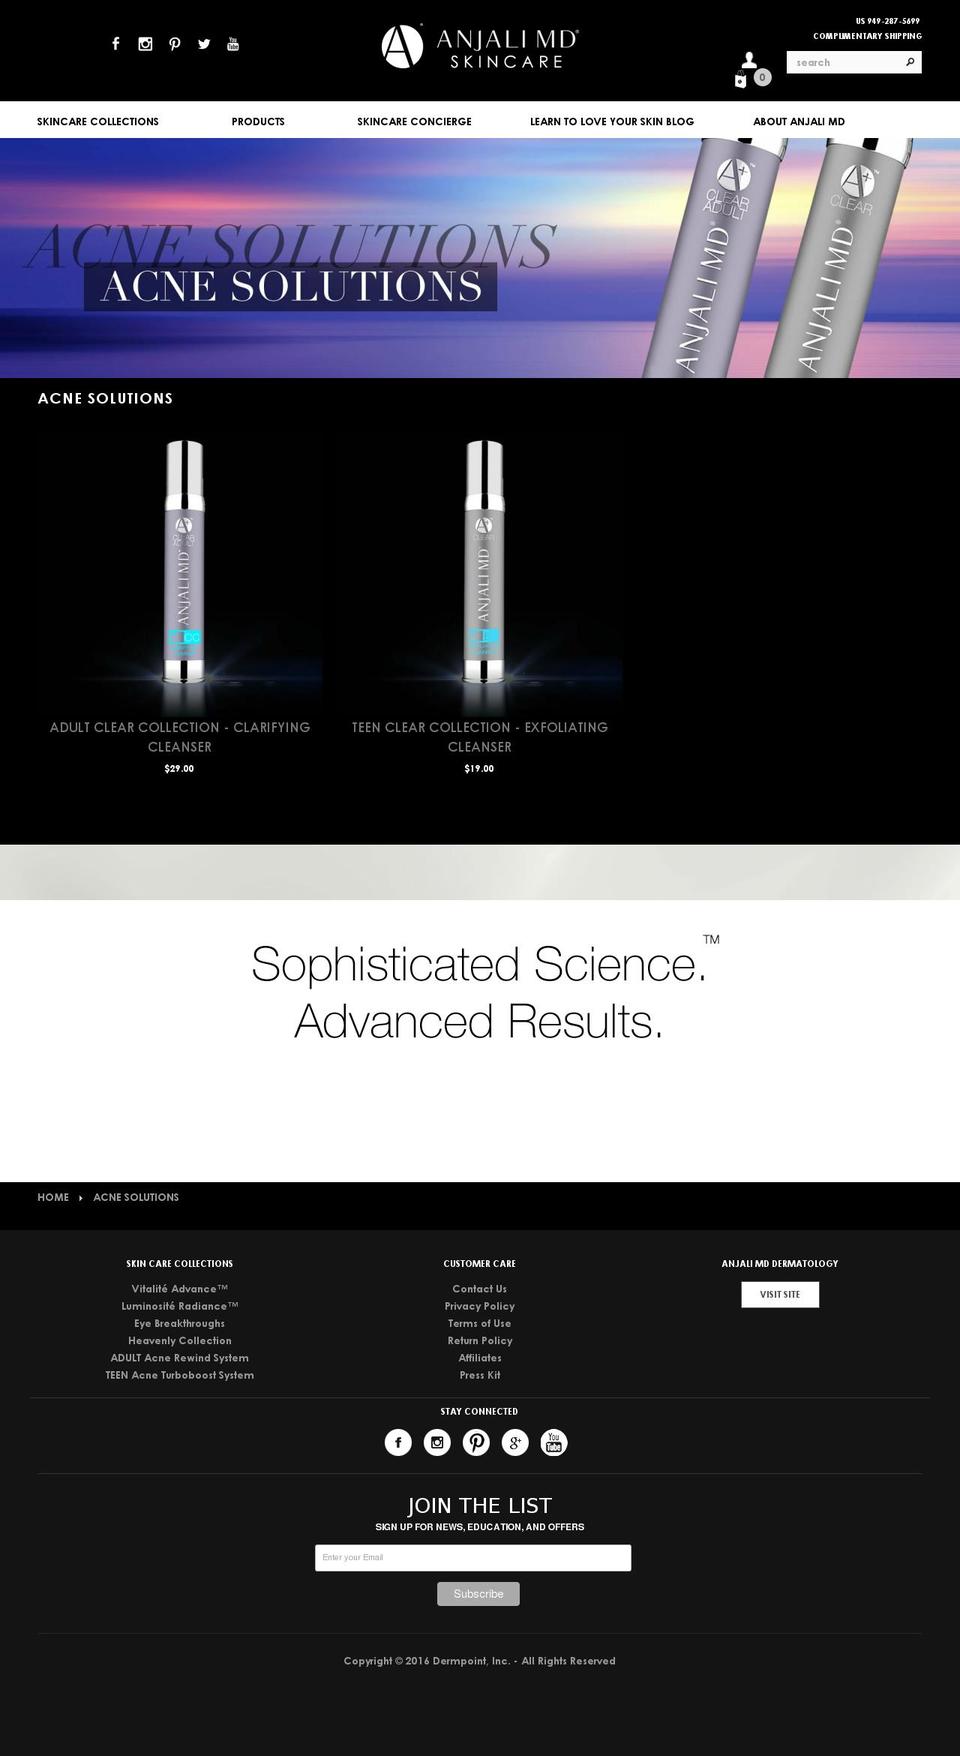 aplusclear.us shopify website screenshot